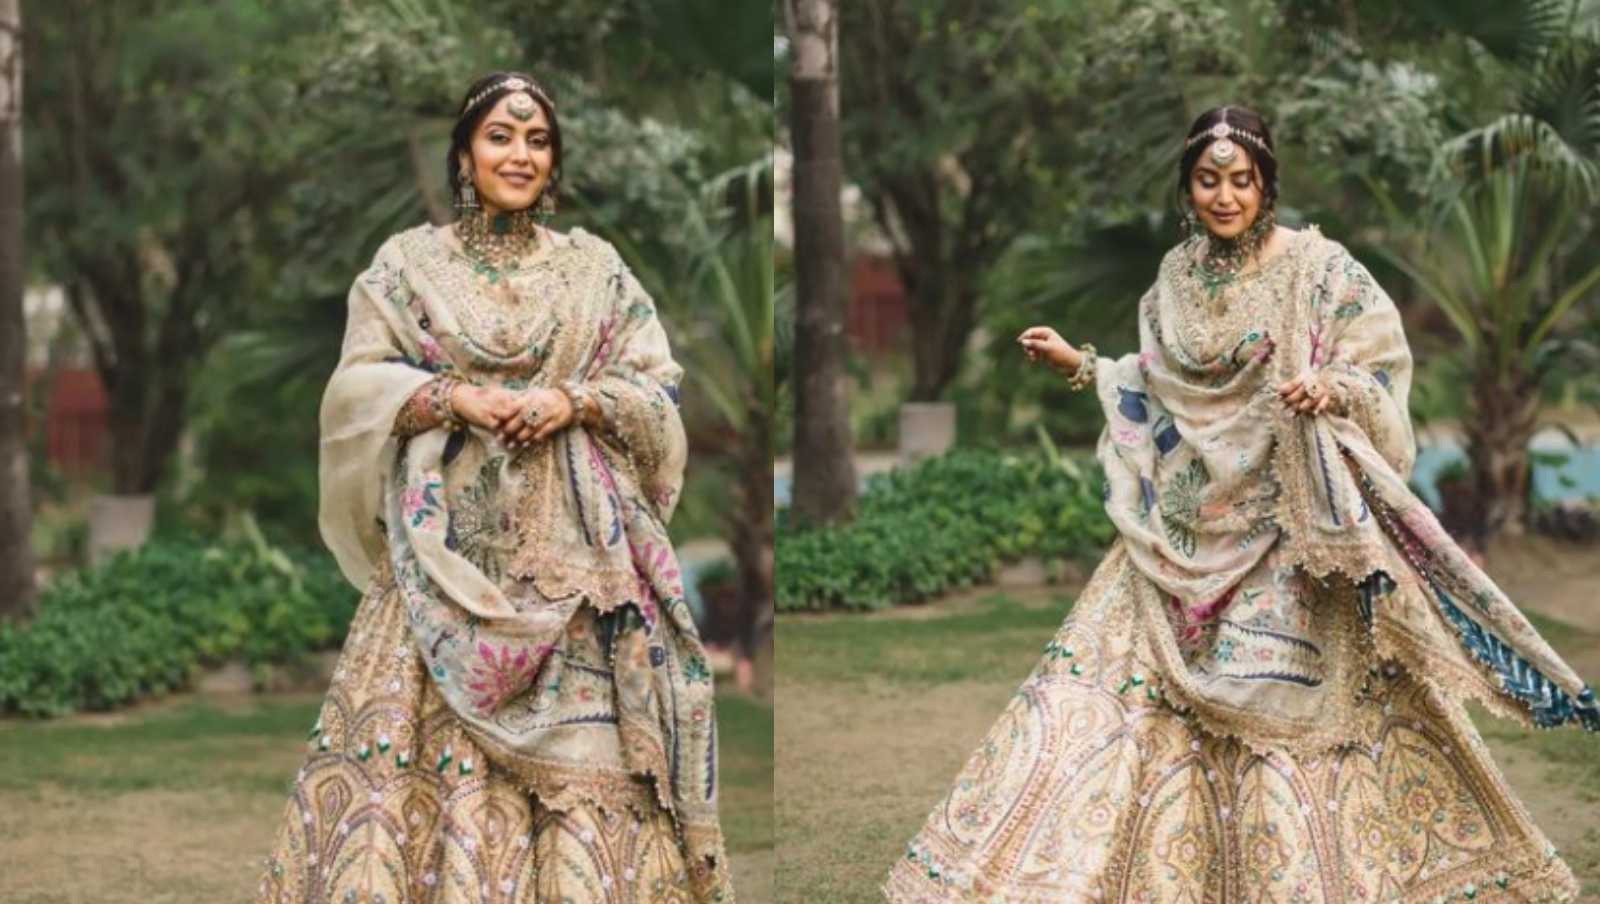 Swara Bhasker exudes royalty in her lavish embellised lehenga for her Walima ceremony with husband Fahad Ahmad, see pics